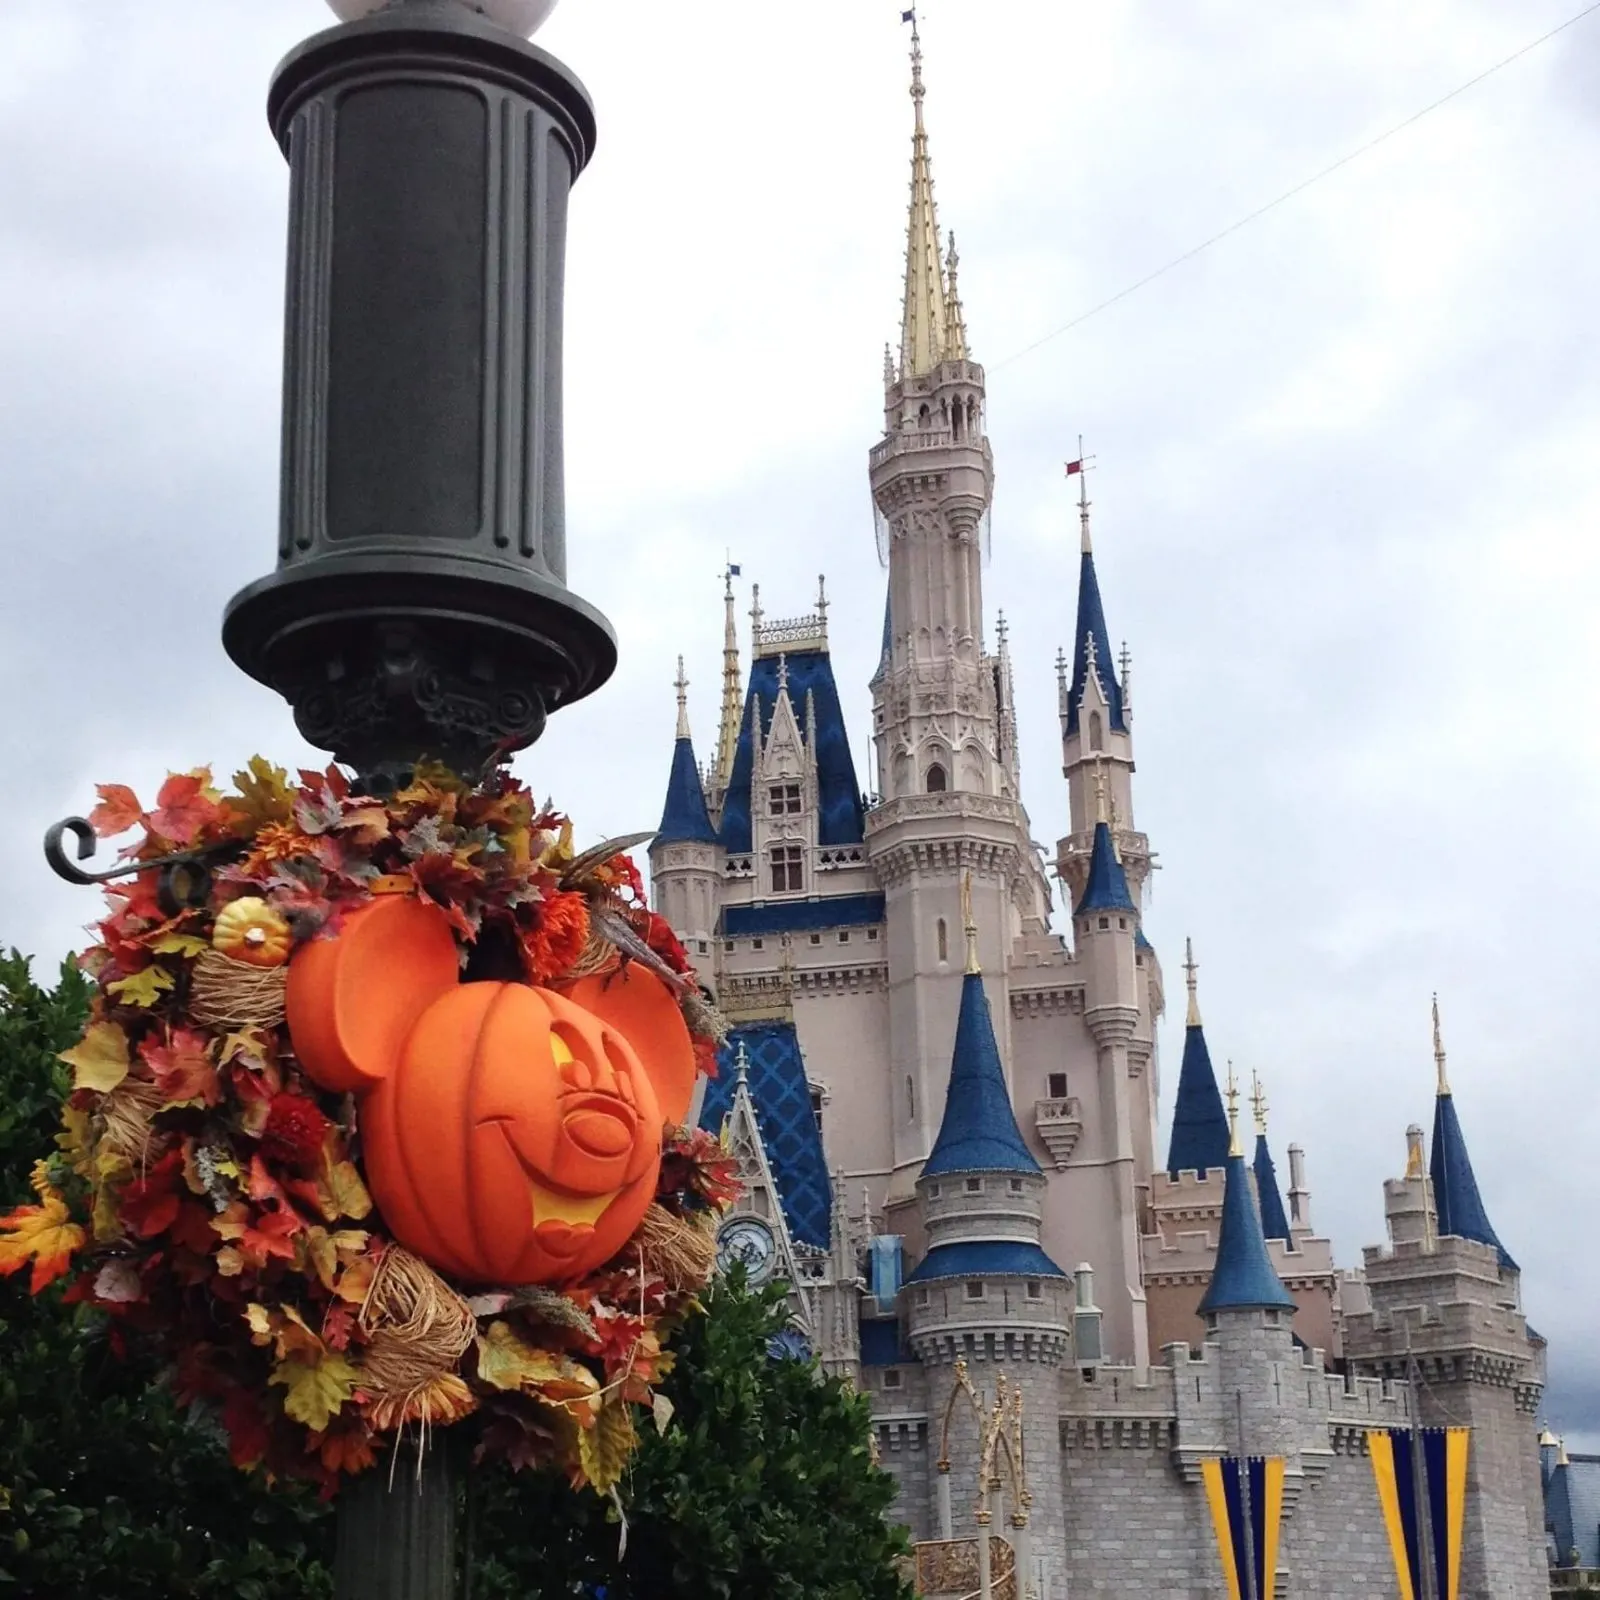 Mickey pumpkin in front of Cinderella's castle